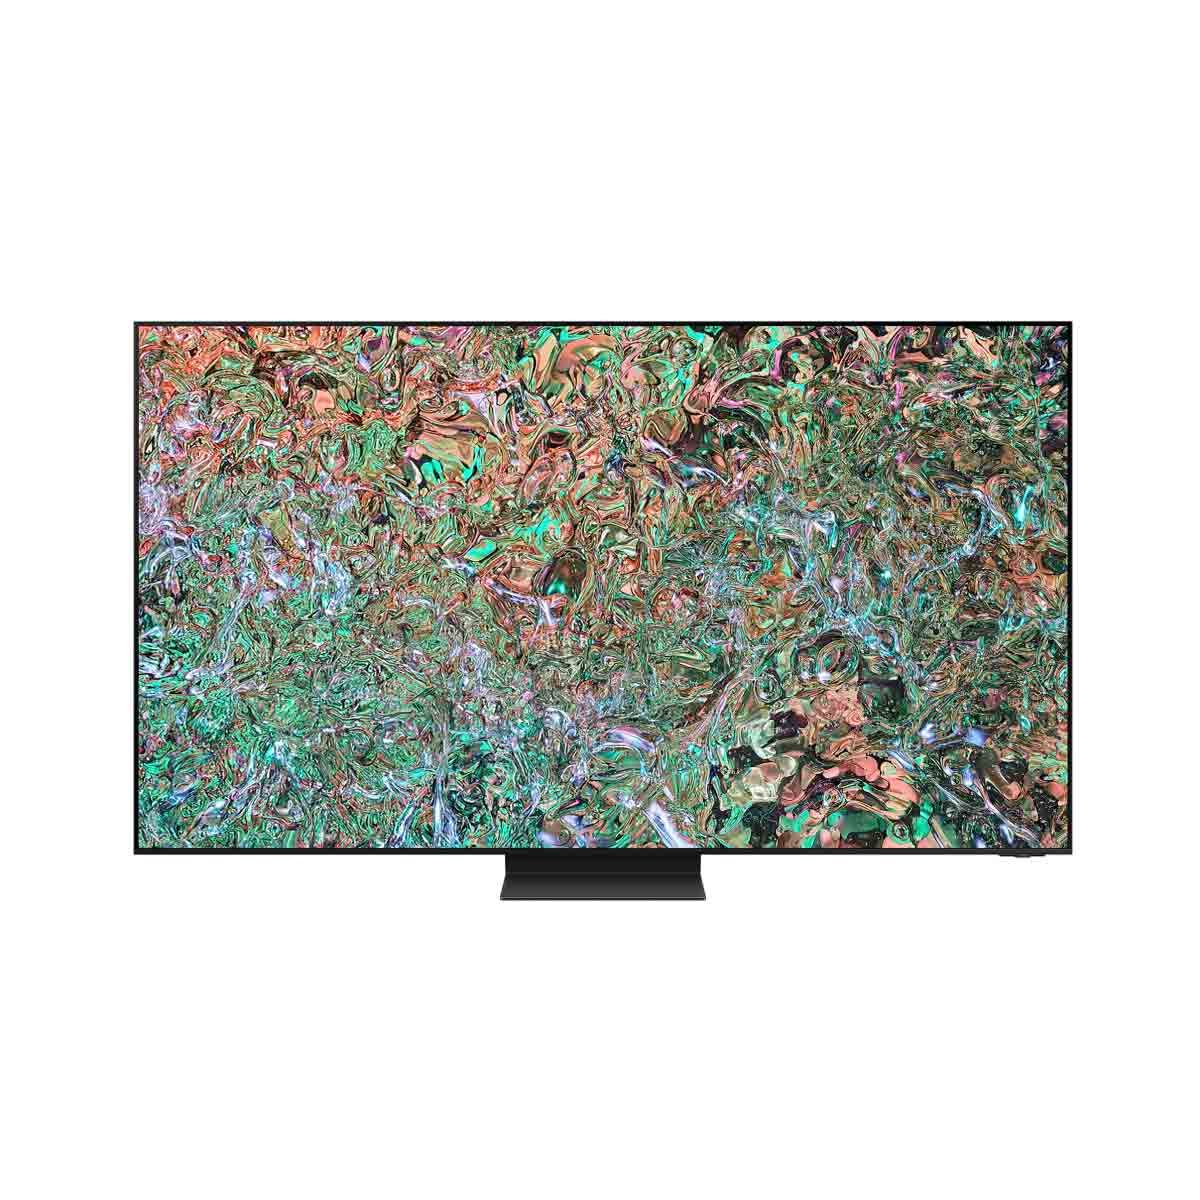 SAMSUNG Neo QLED 8K Smart TV รุ่น QA65QN800DK 144Hz สมาร์ททีวี ขนาด 65 นิ้ว